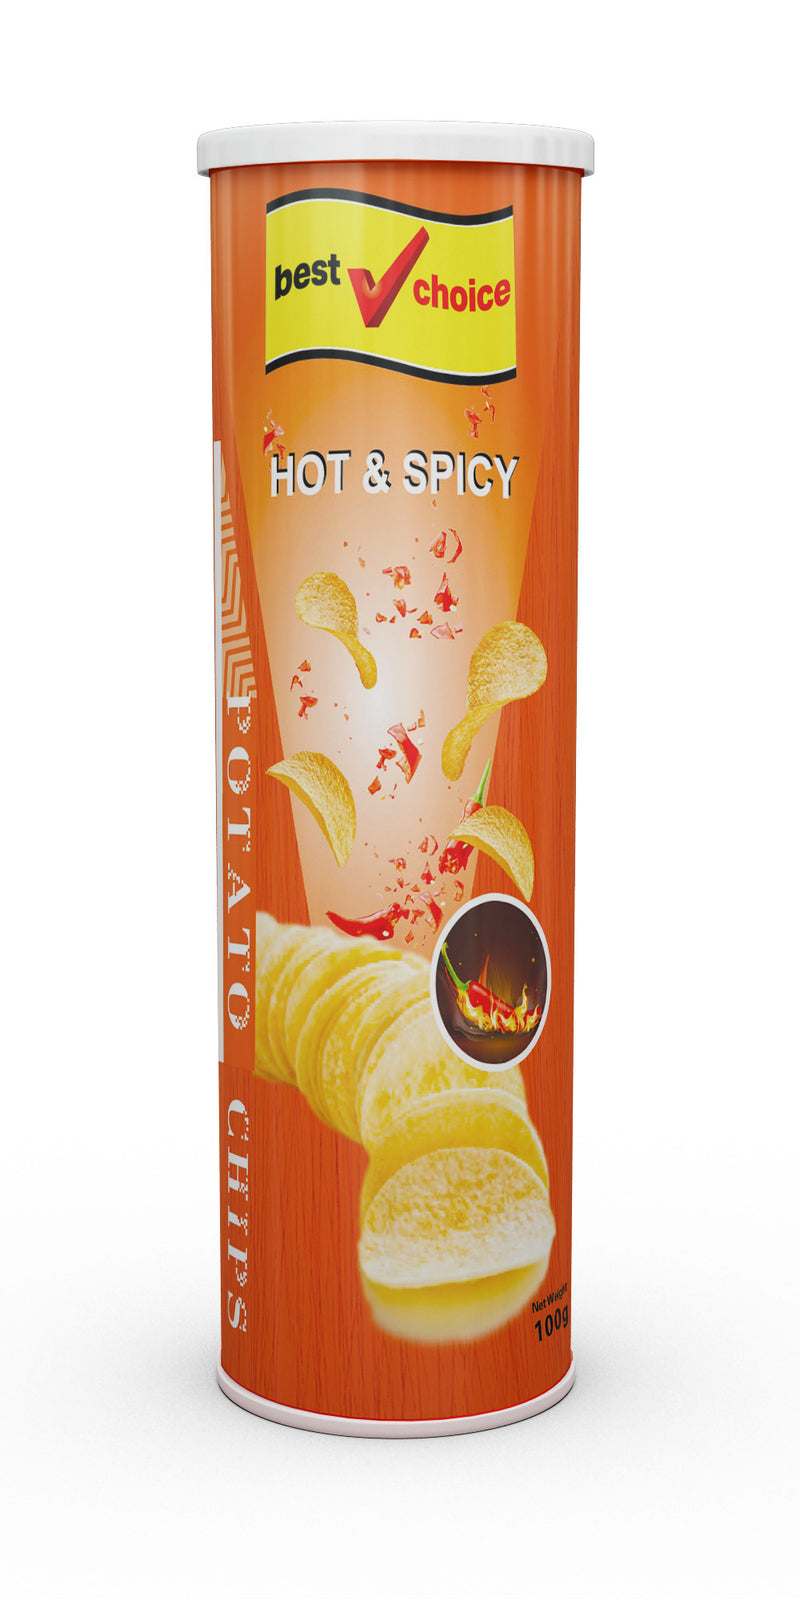 Best Choice Potato Chips 24 x 100g Hot & Spicy Flavour